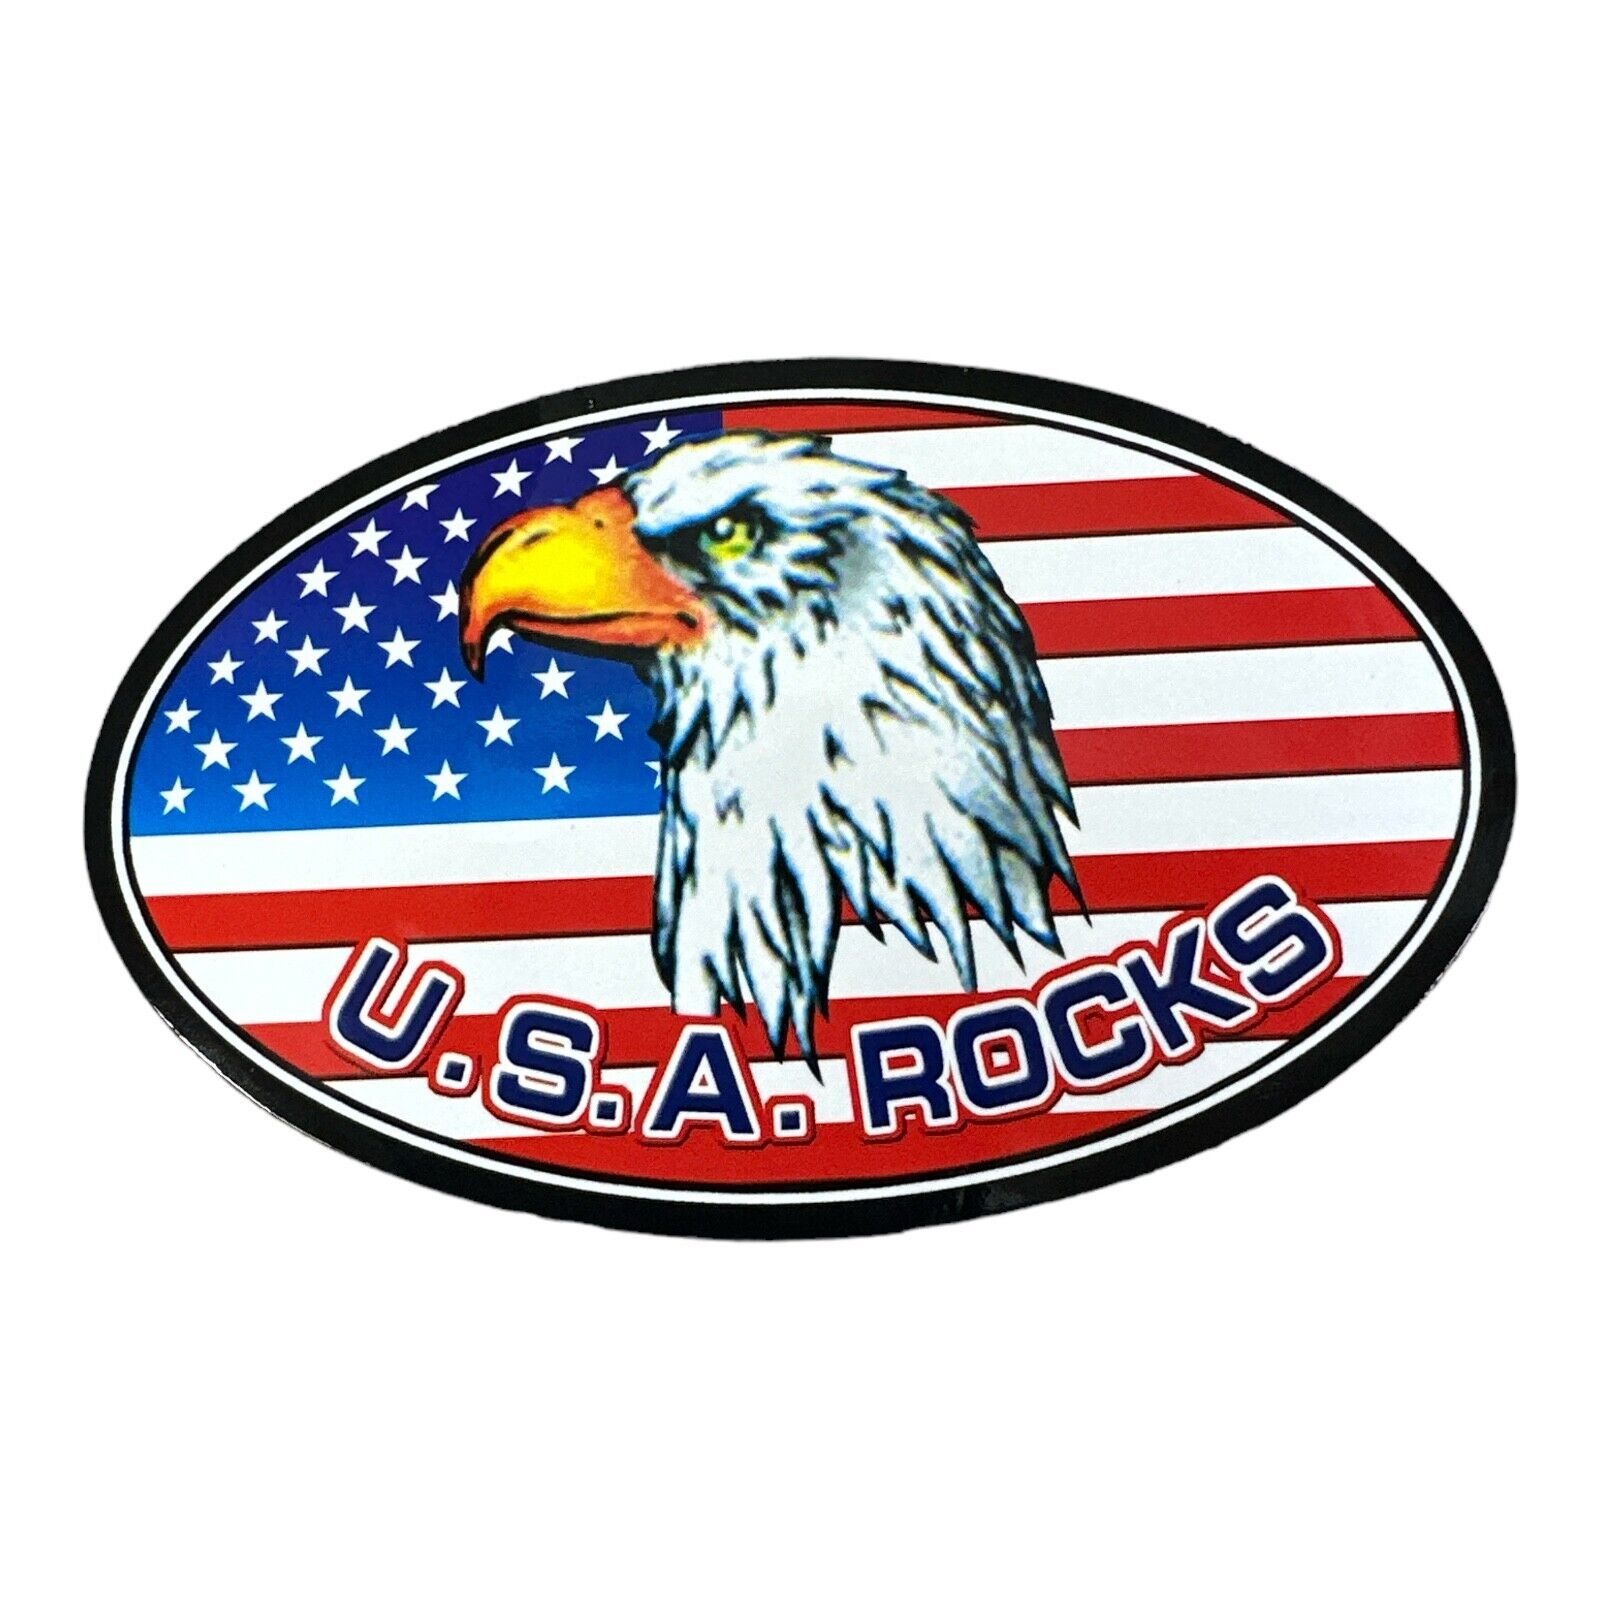 USA Rocks Oval Magnet (5